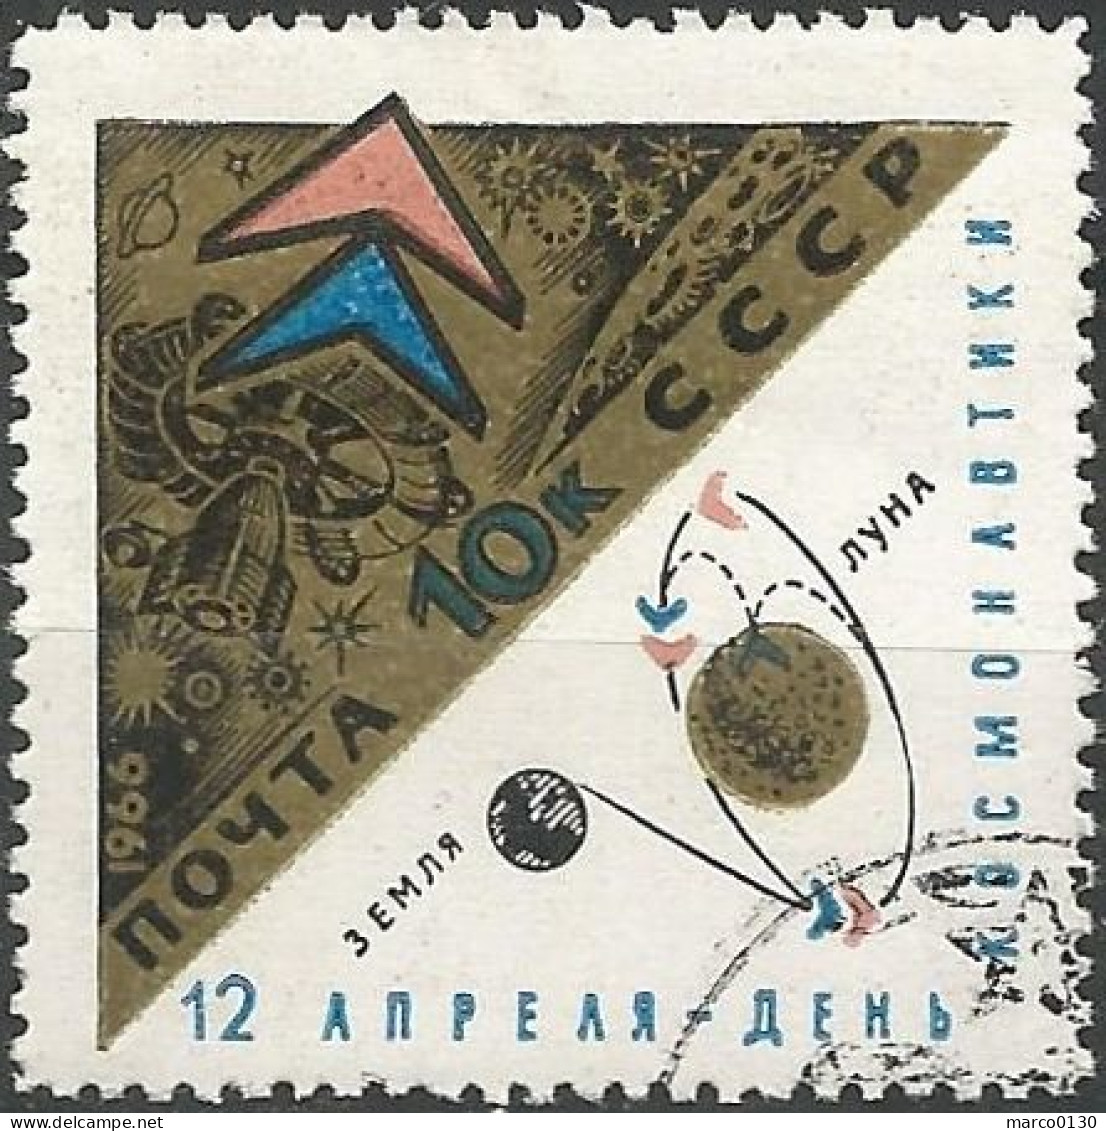 RUSSIE N° 3088 OBLITERE - Used Stamps